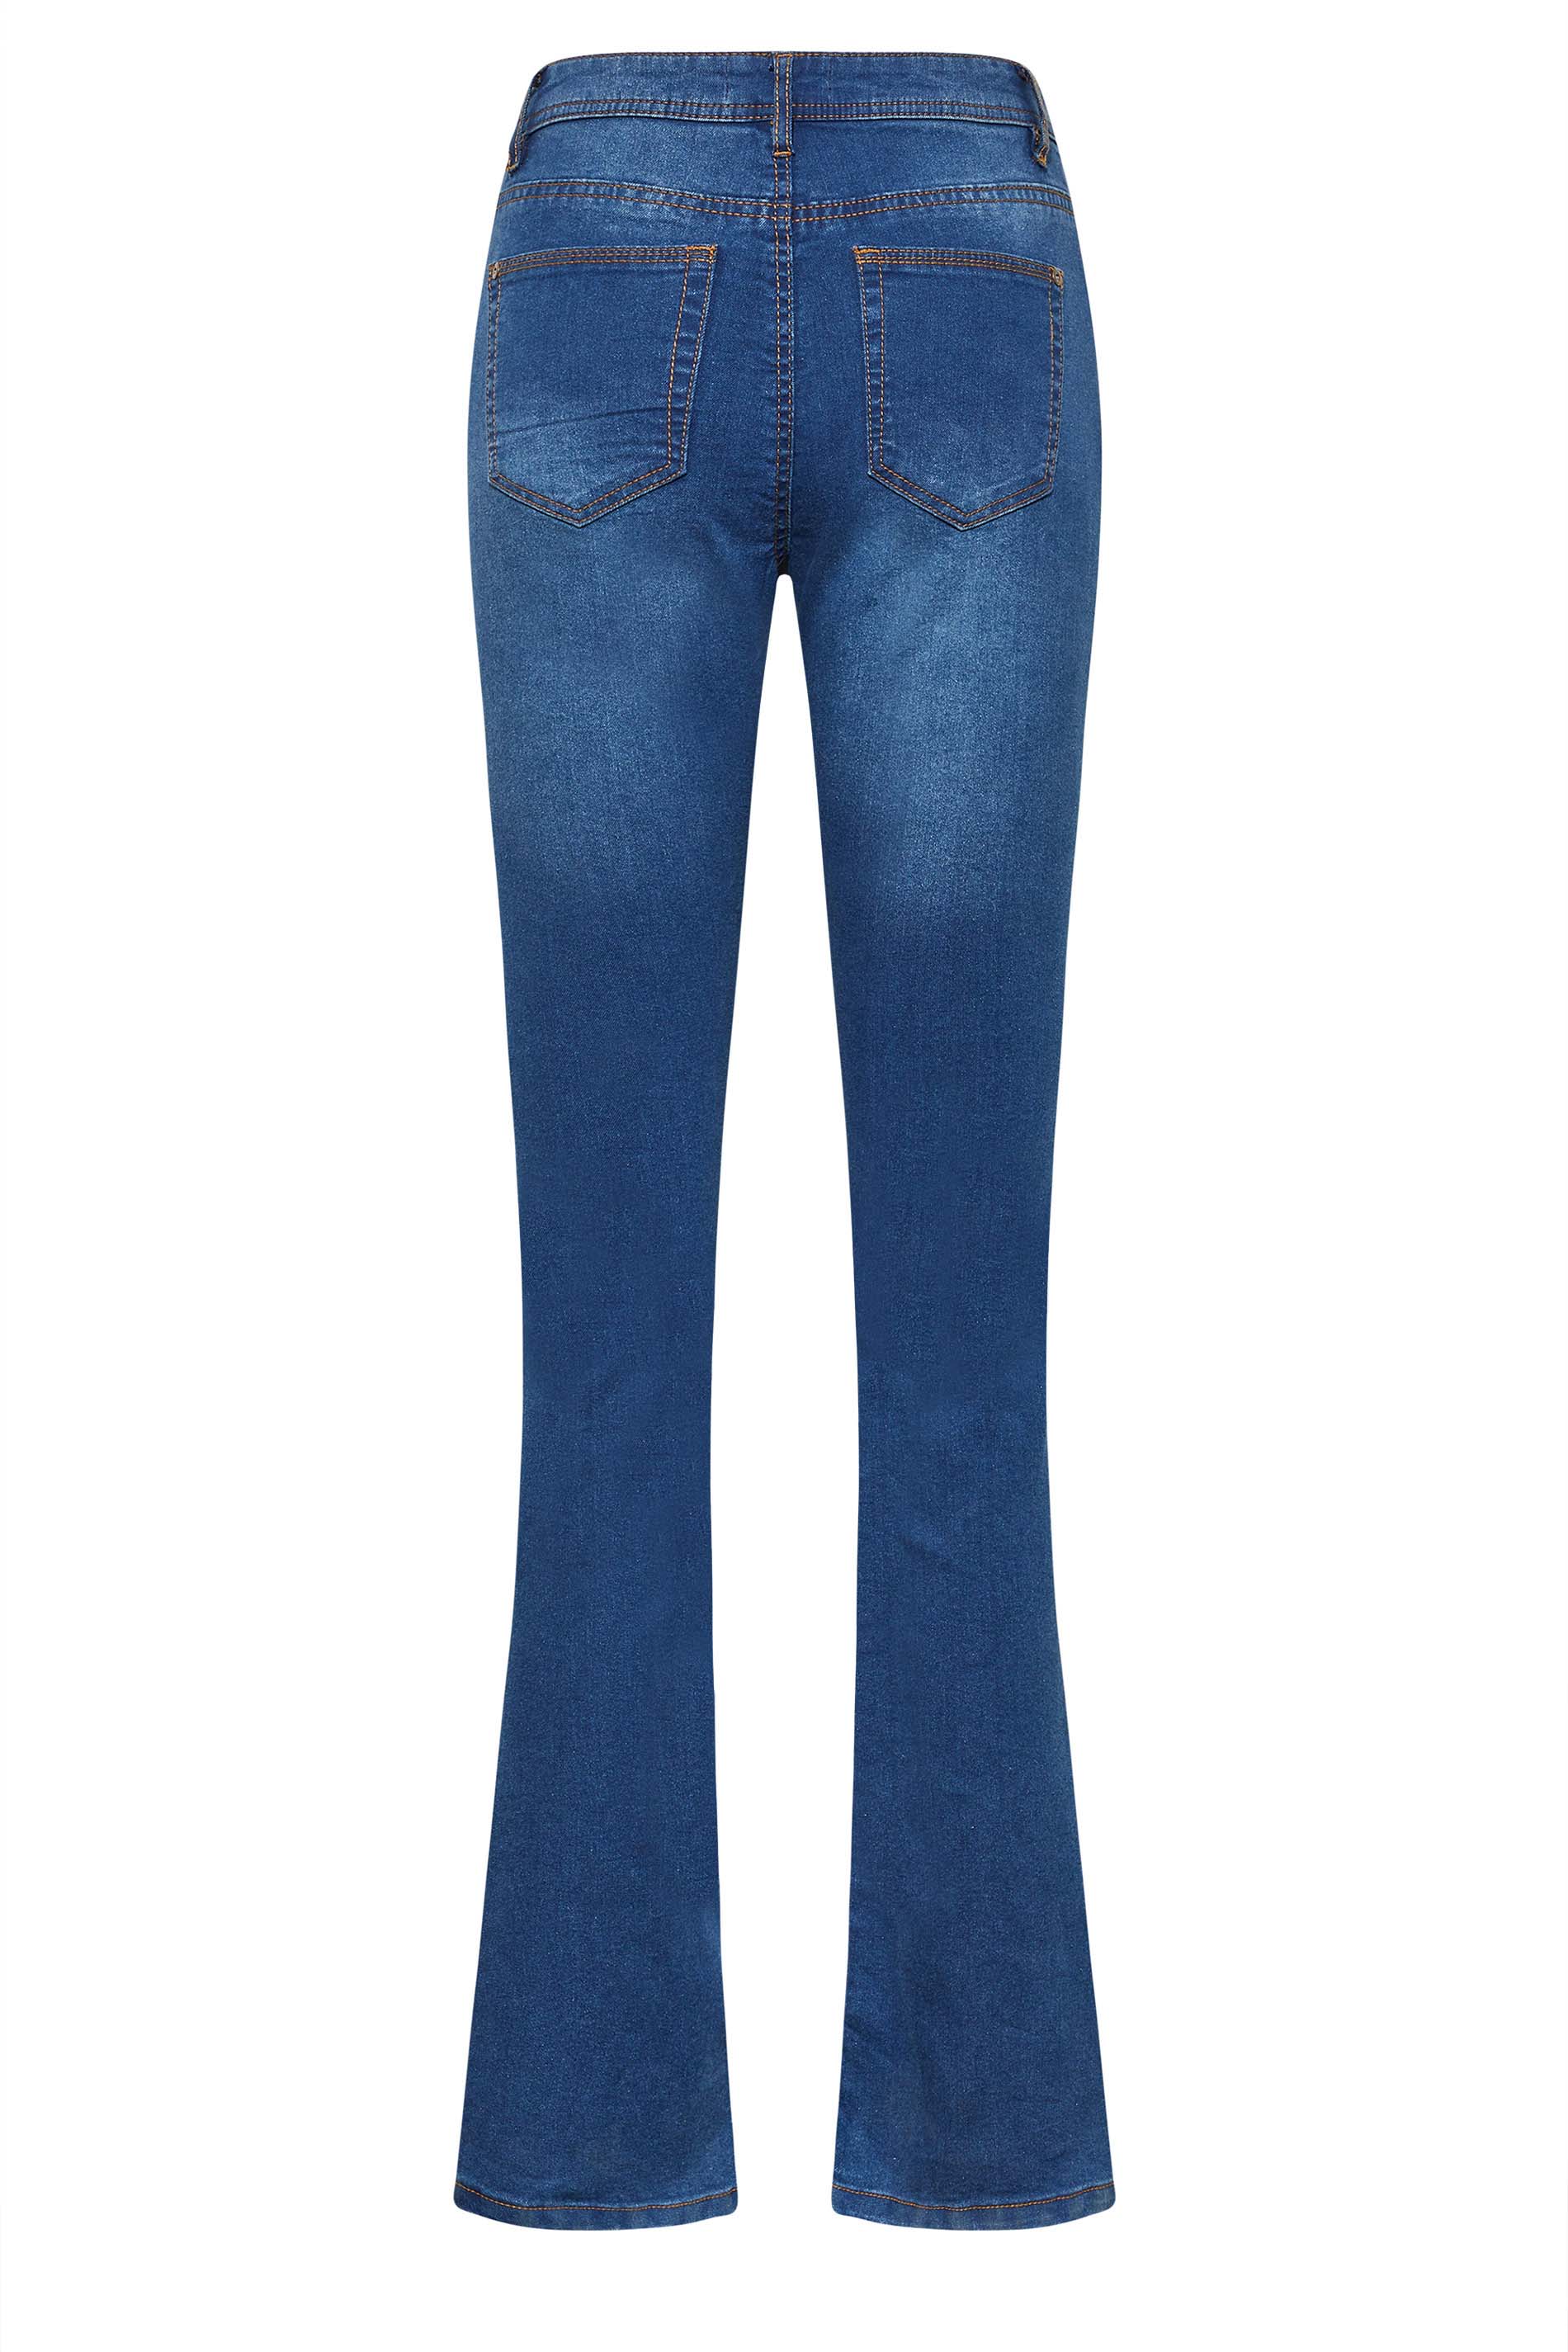 Tall Women's Blue RAE Bootcut Jeans | Long Tall Sally  3